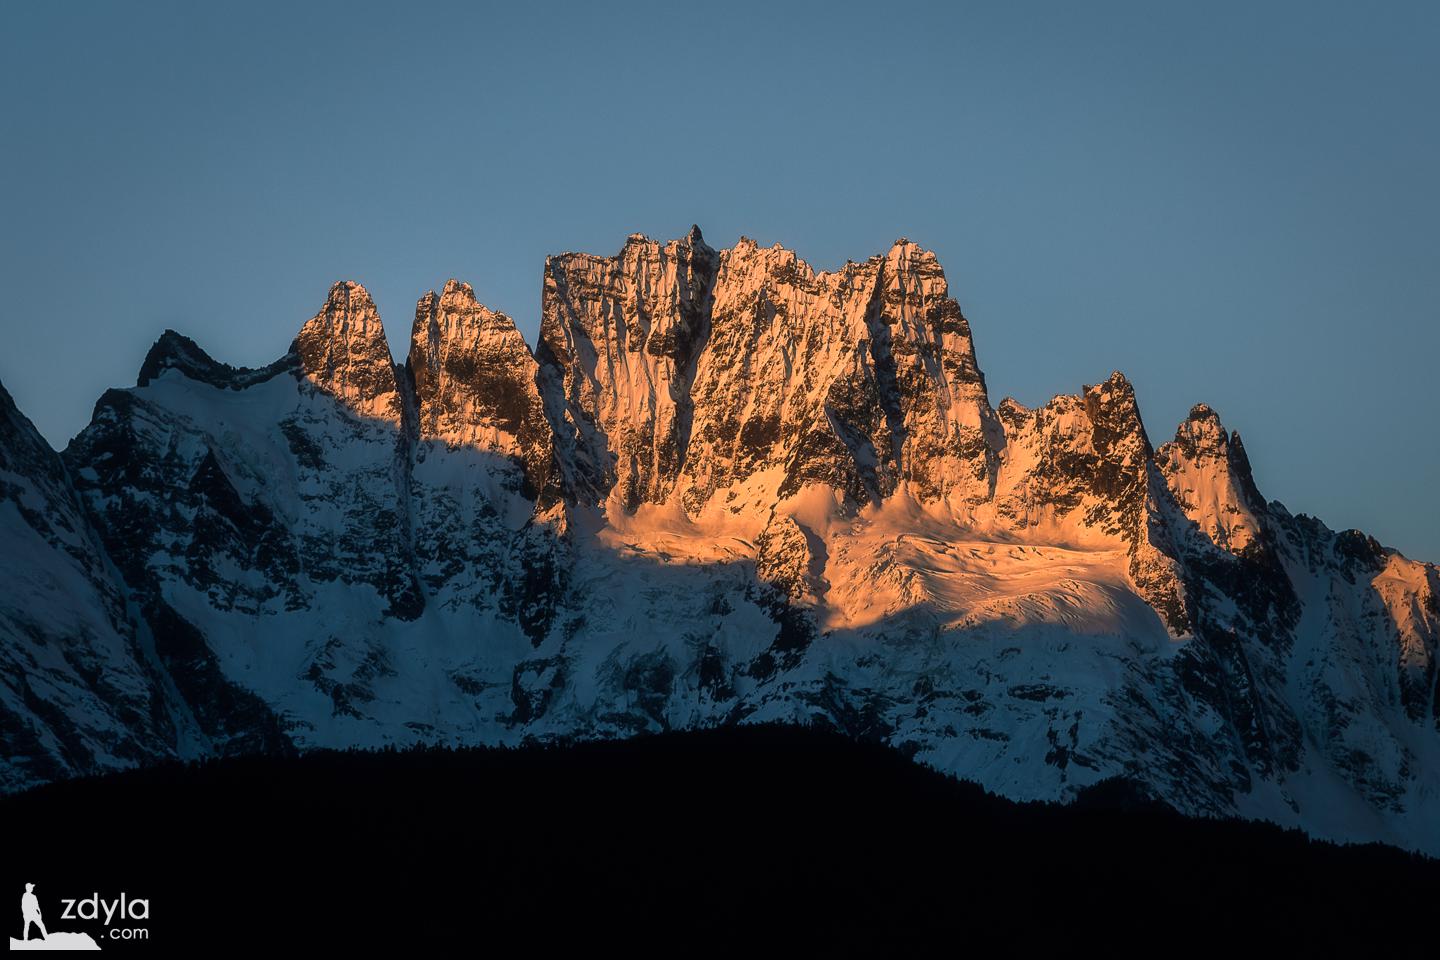 Meili Snow Mountain · Sunrise Golden Mountain